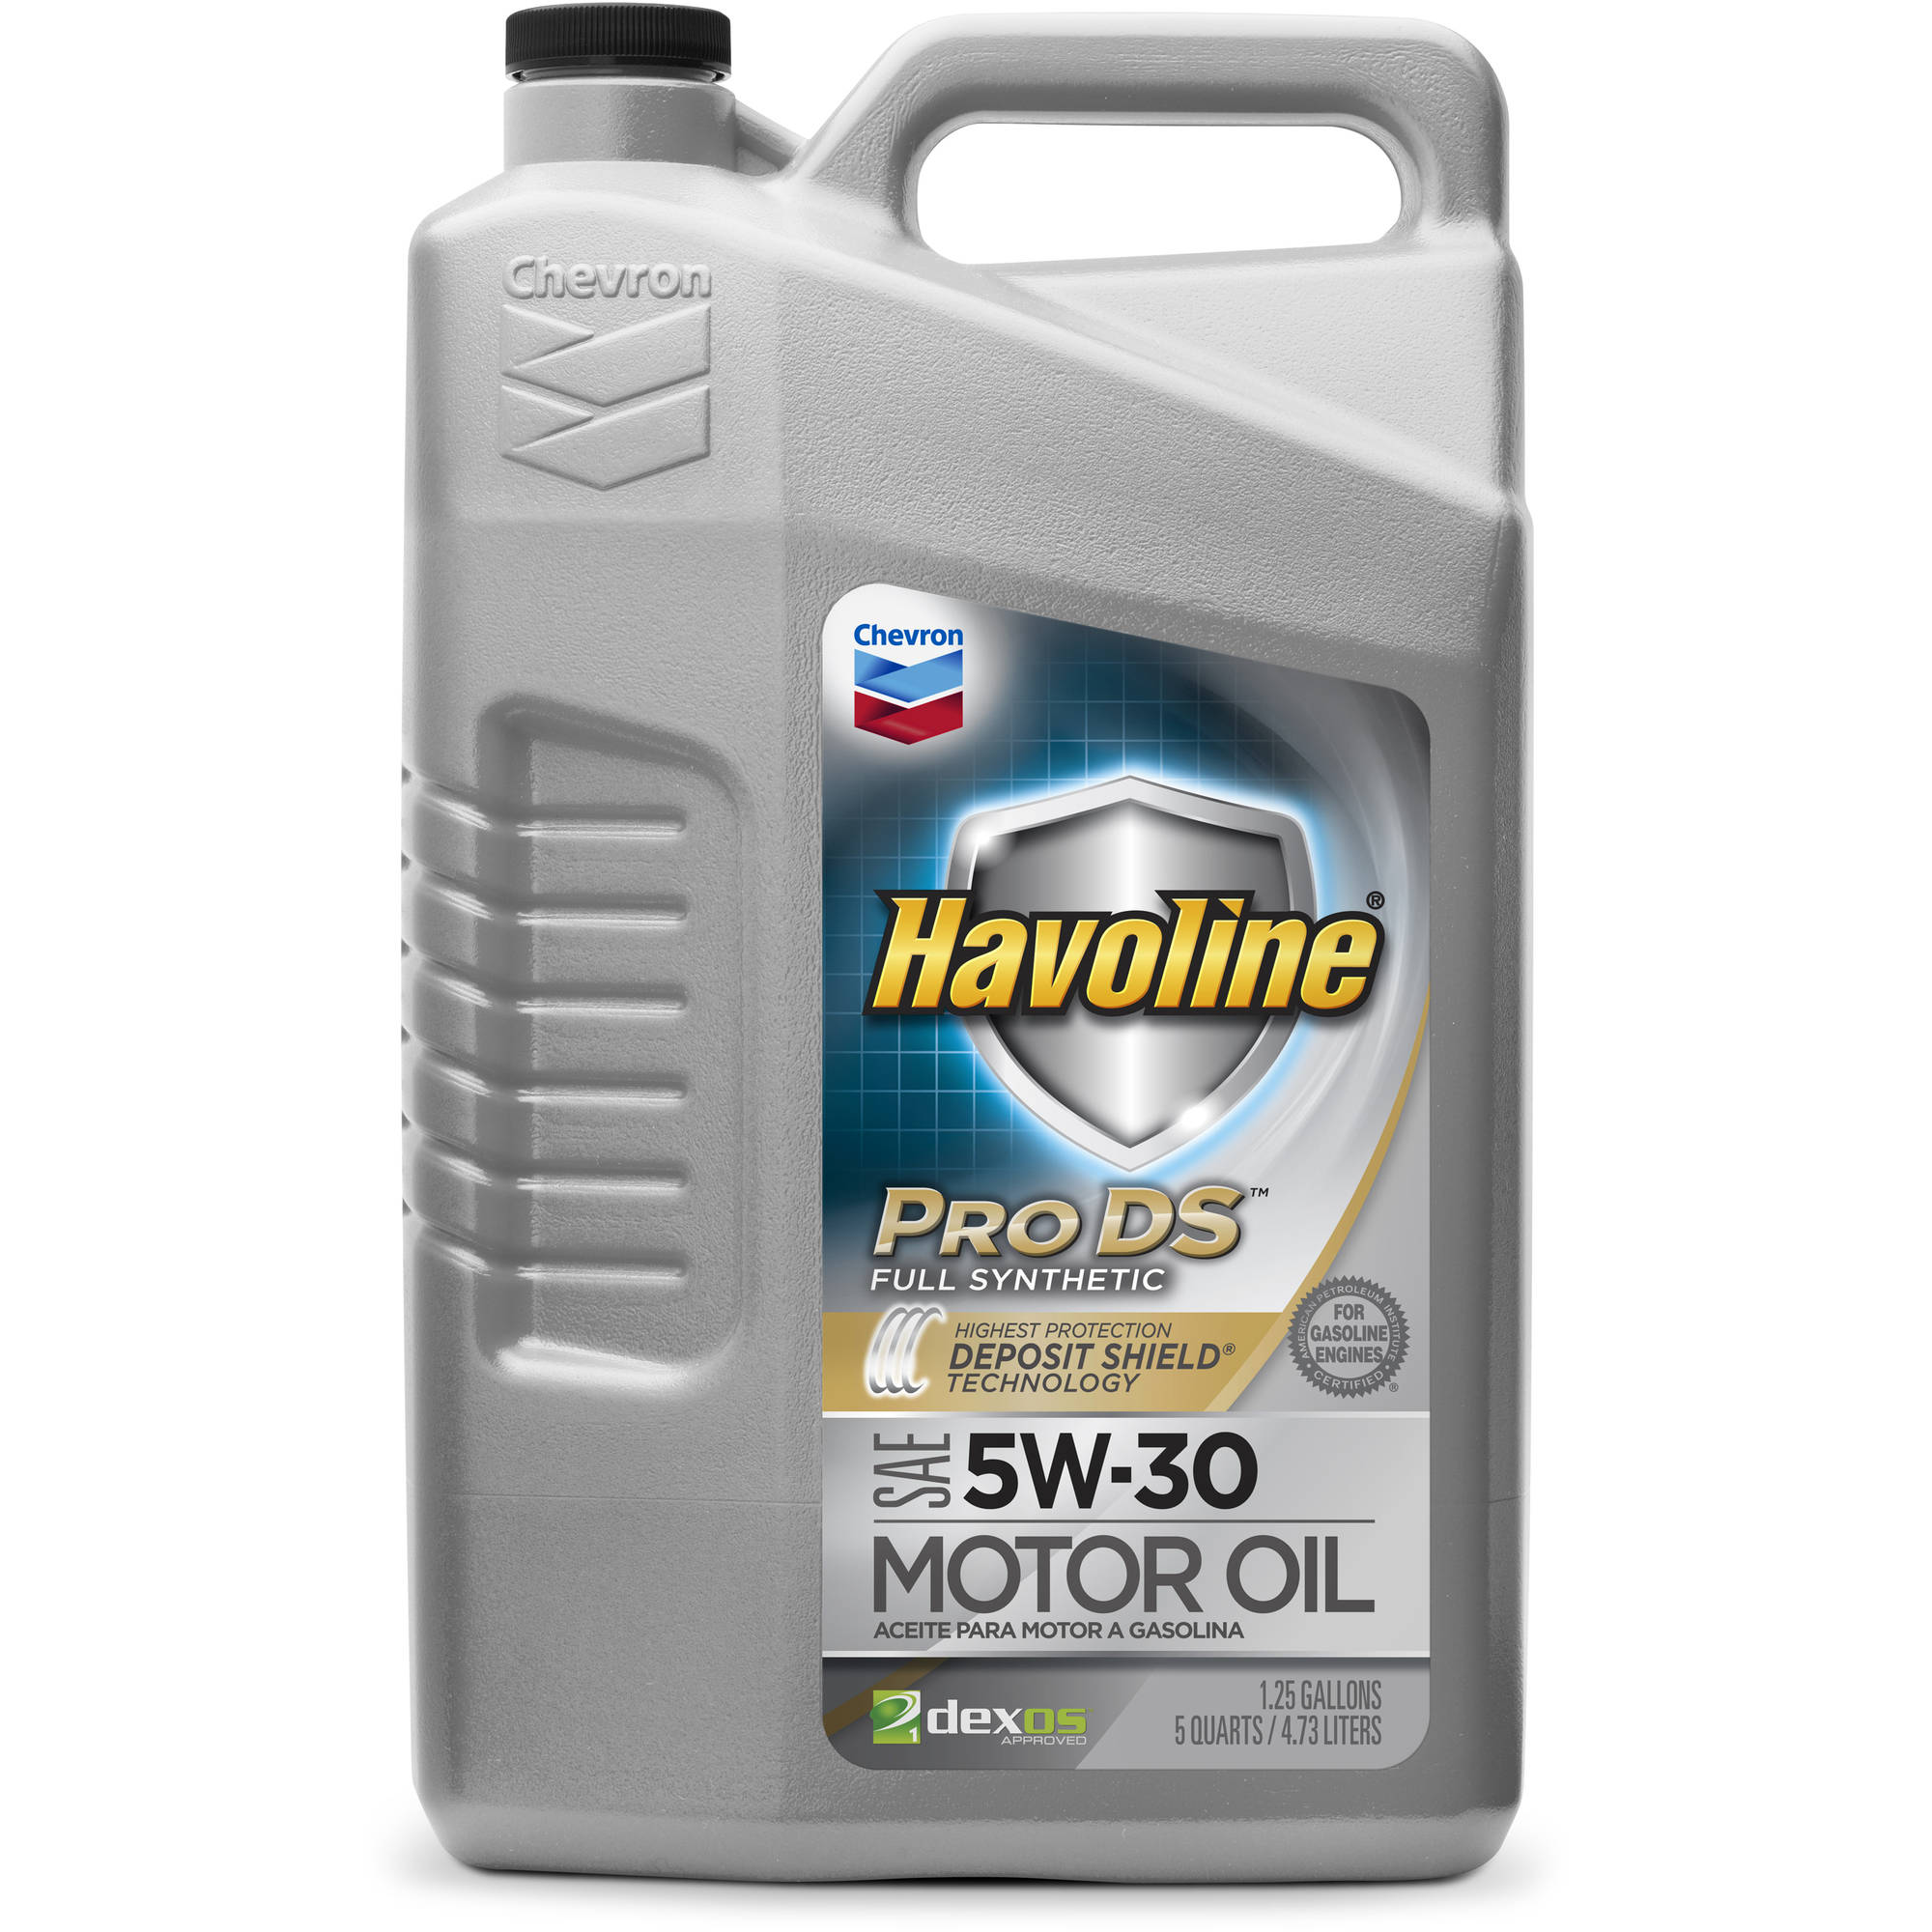 Chevron Havoline Pro-DS Synthetic Motor Oil 5W-30, 5 quart - image 3 of 7